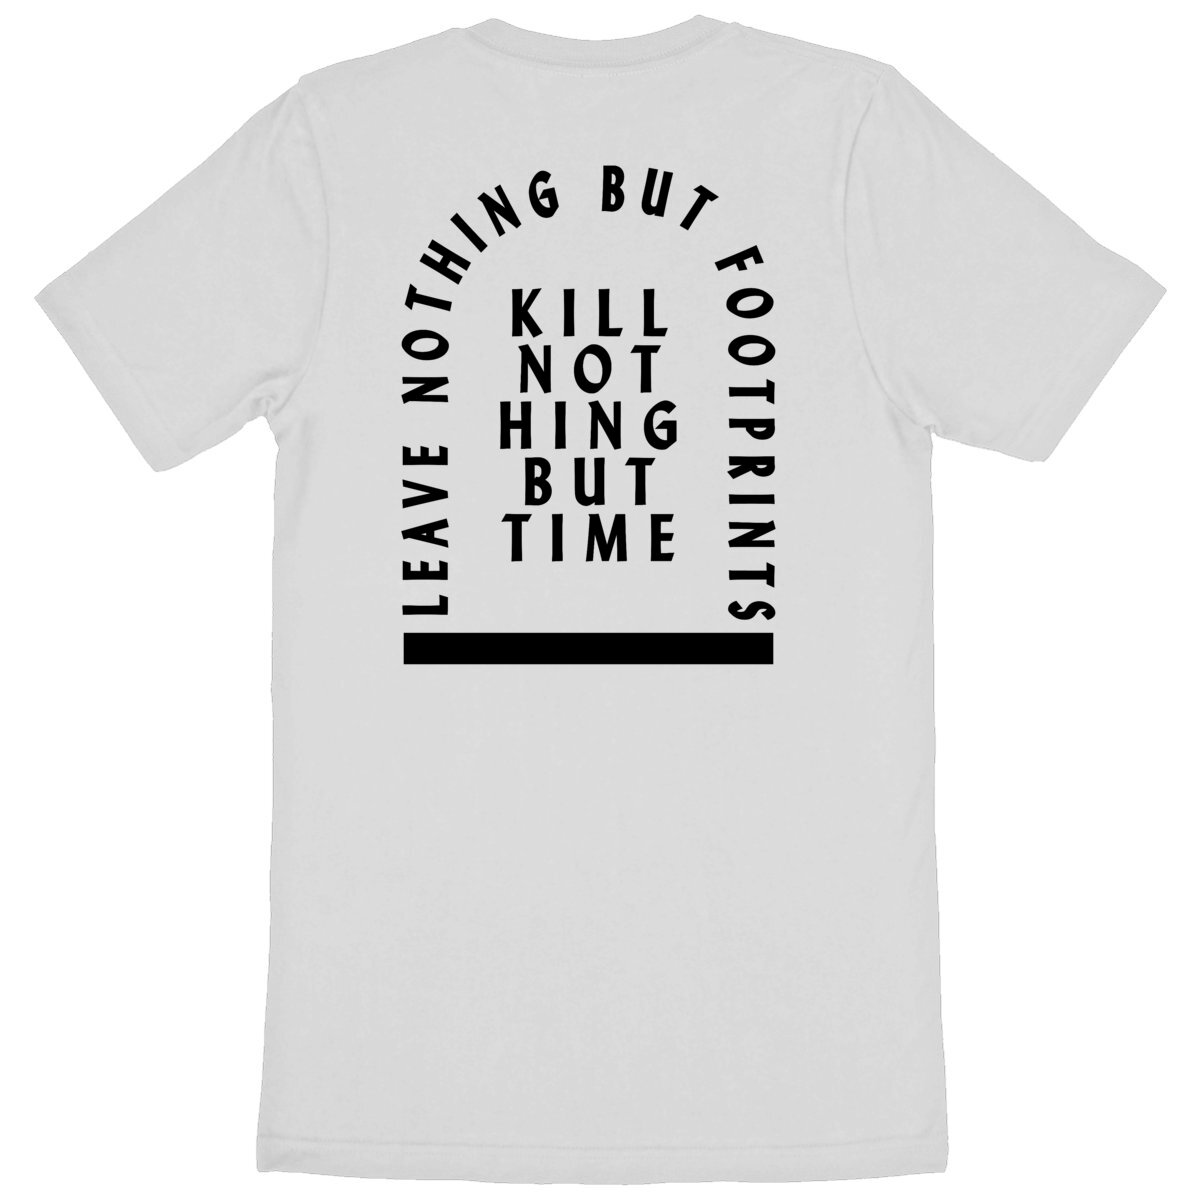 Kill nothing but time - Unisex Organic T-shirt